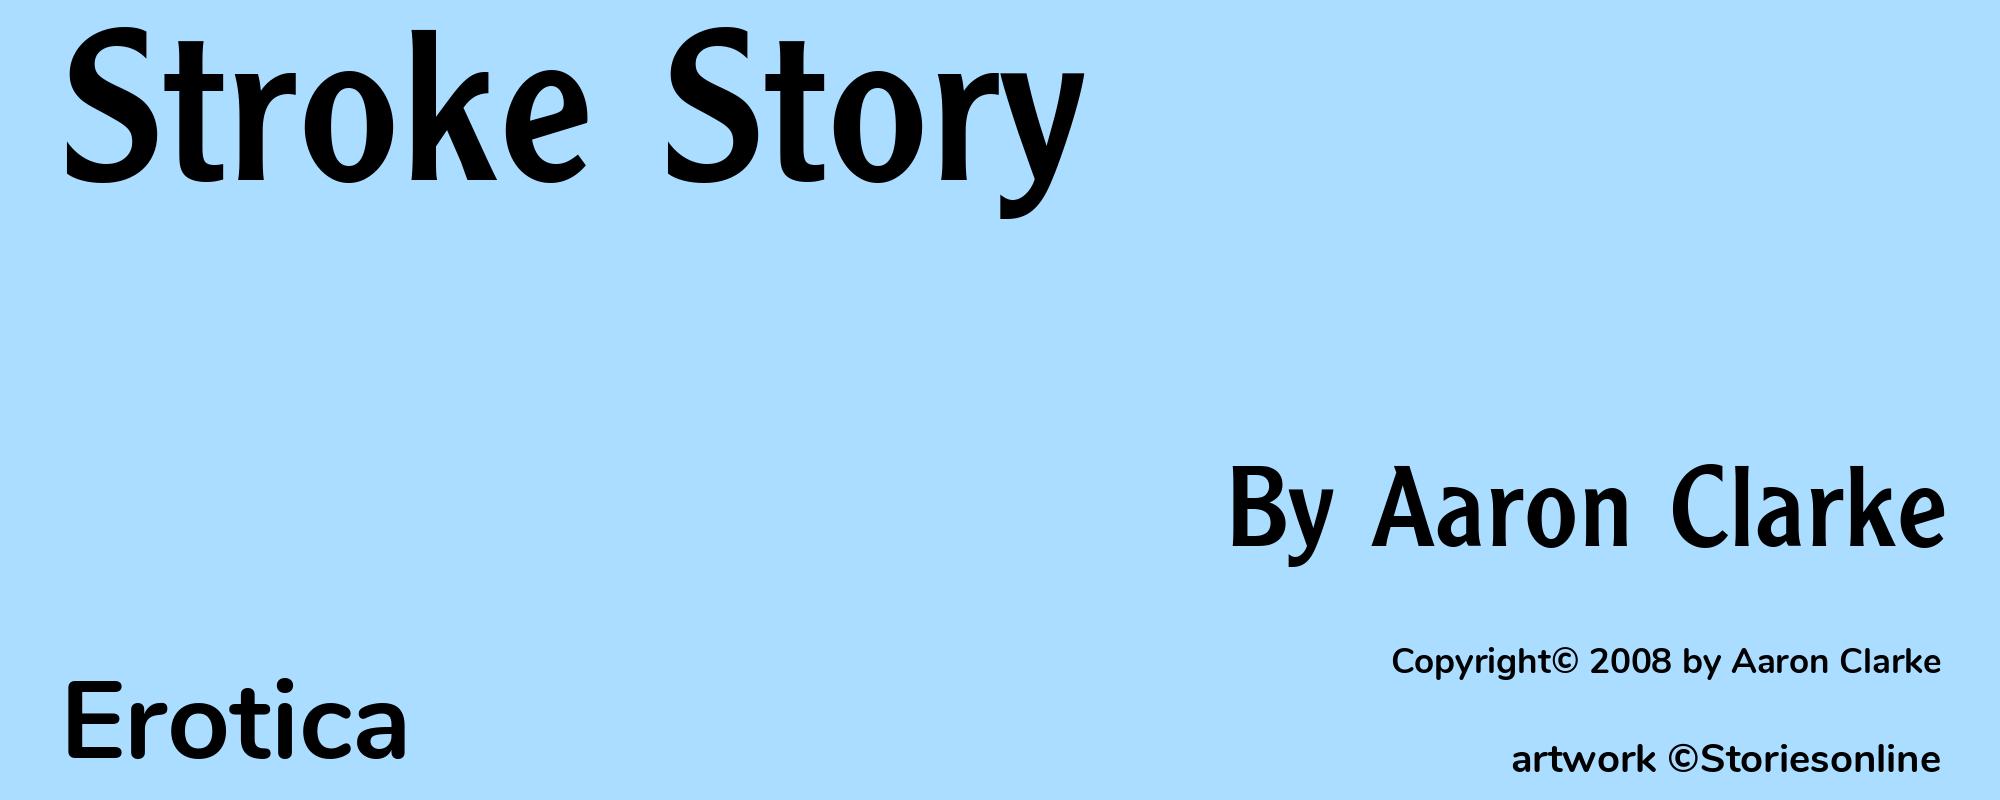 Stroke Story - Cover